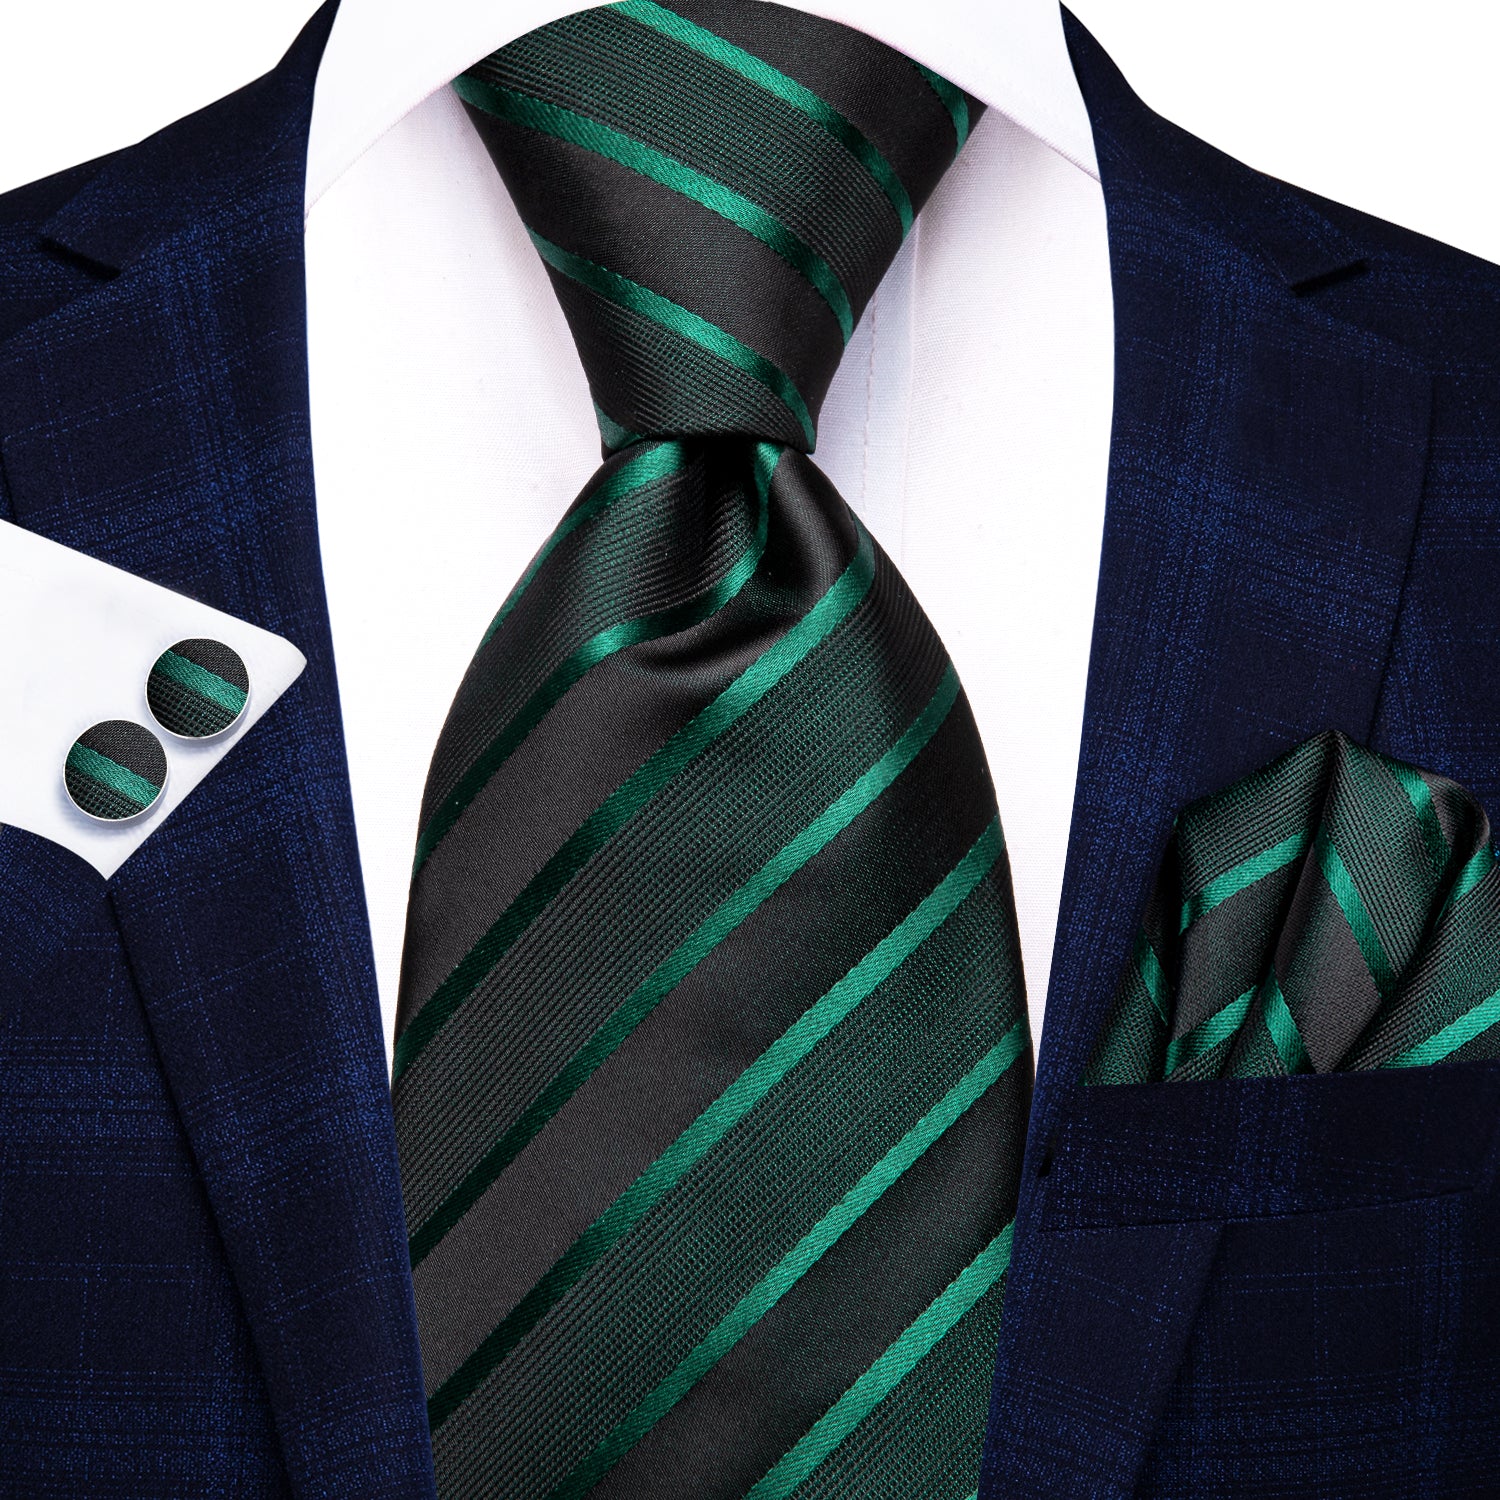 Hi-Tie Black Green Striped Men's Tie Pocket Square Cufflinks Set